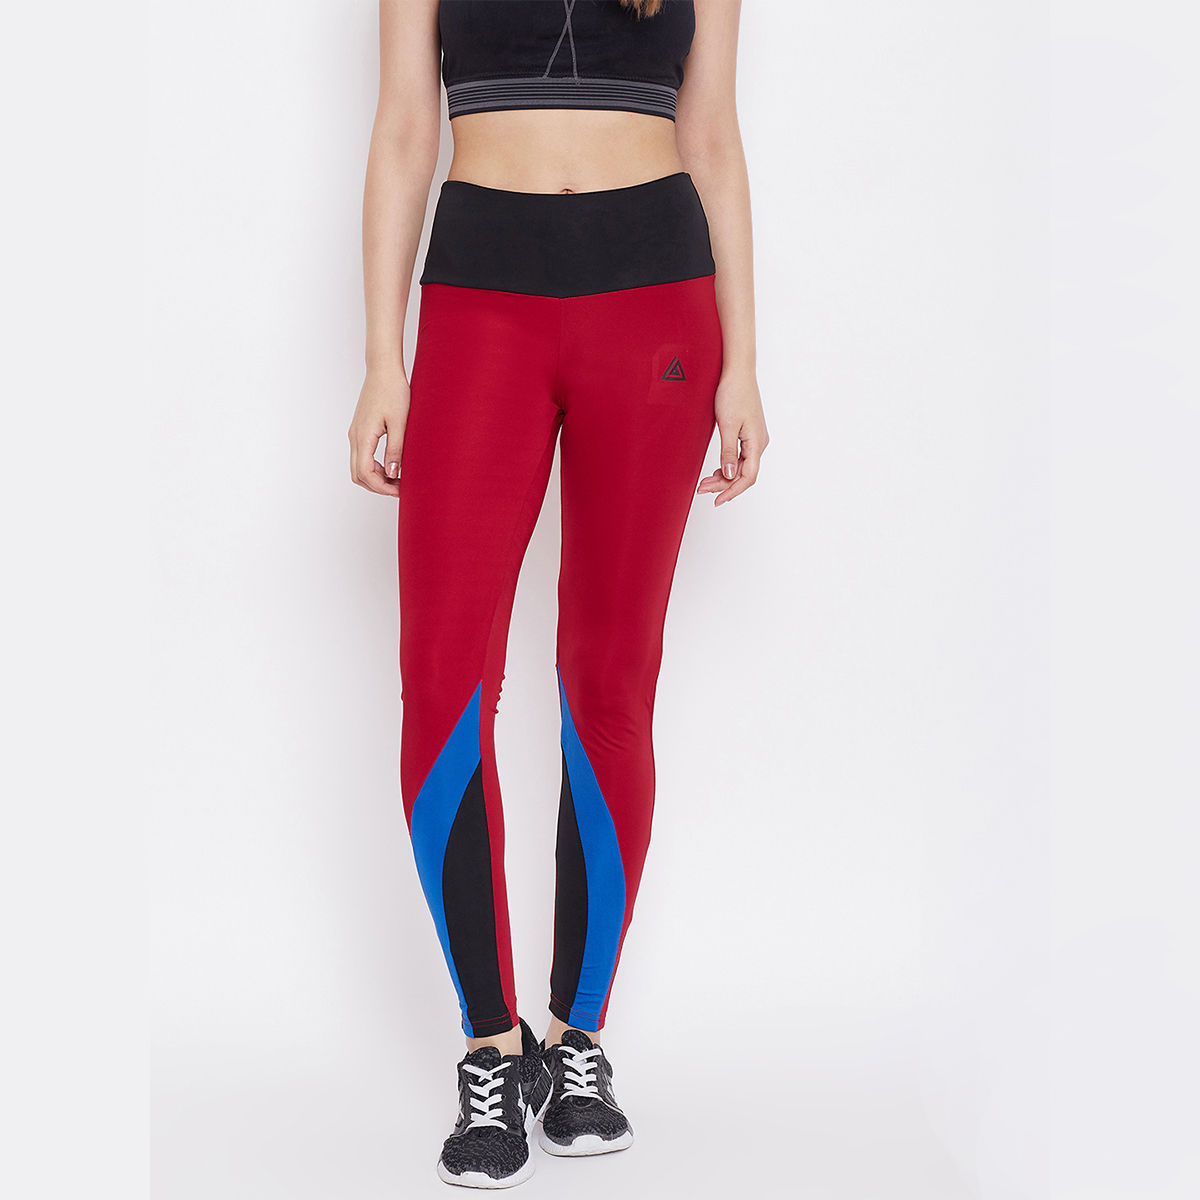 Buy Tara Free-size Women Leggings pack of 3 in RED BLACK & WHITE Color at  Amazon.in